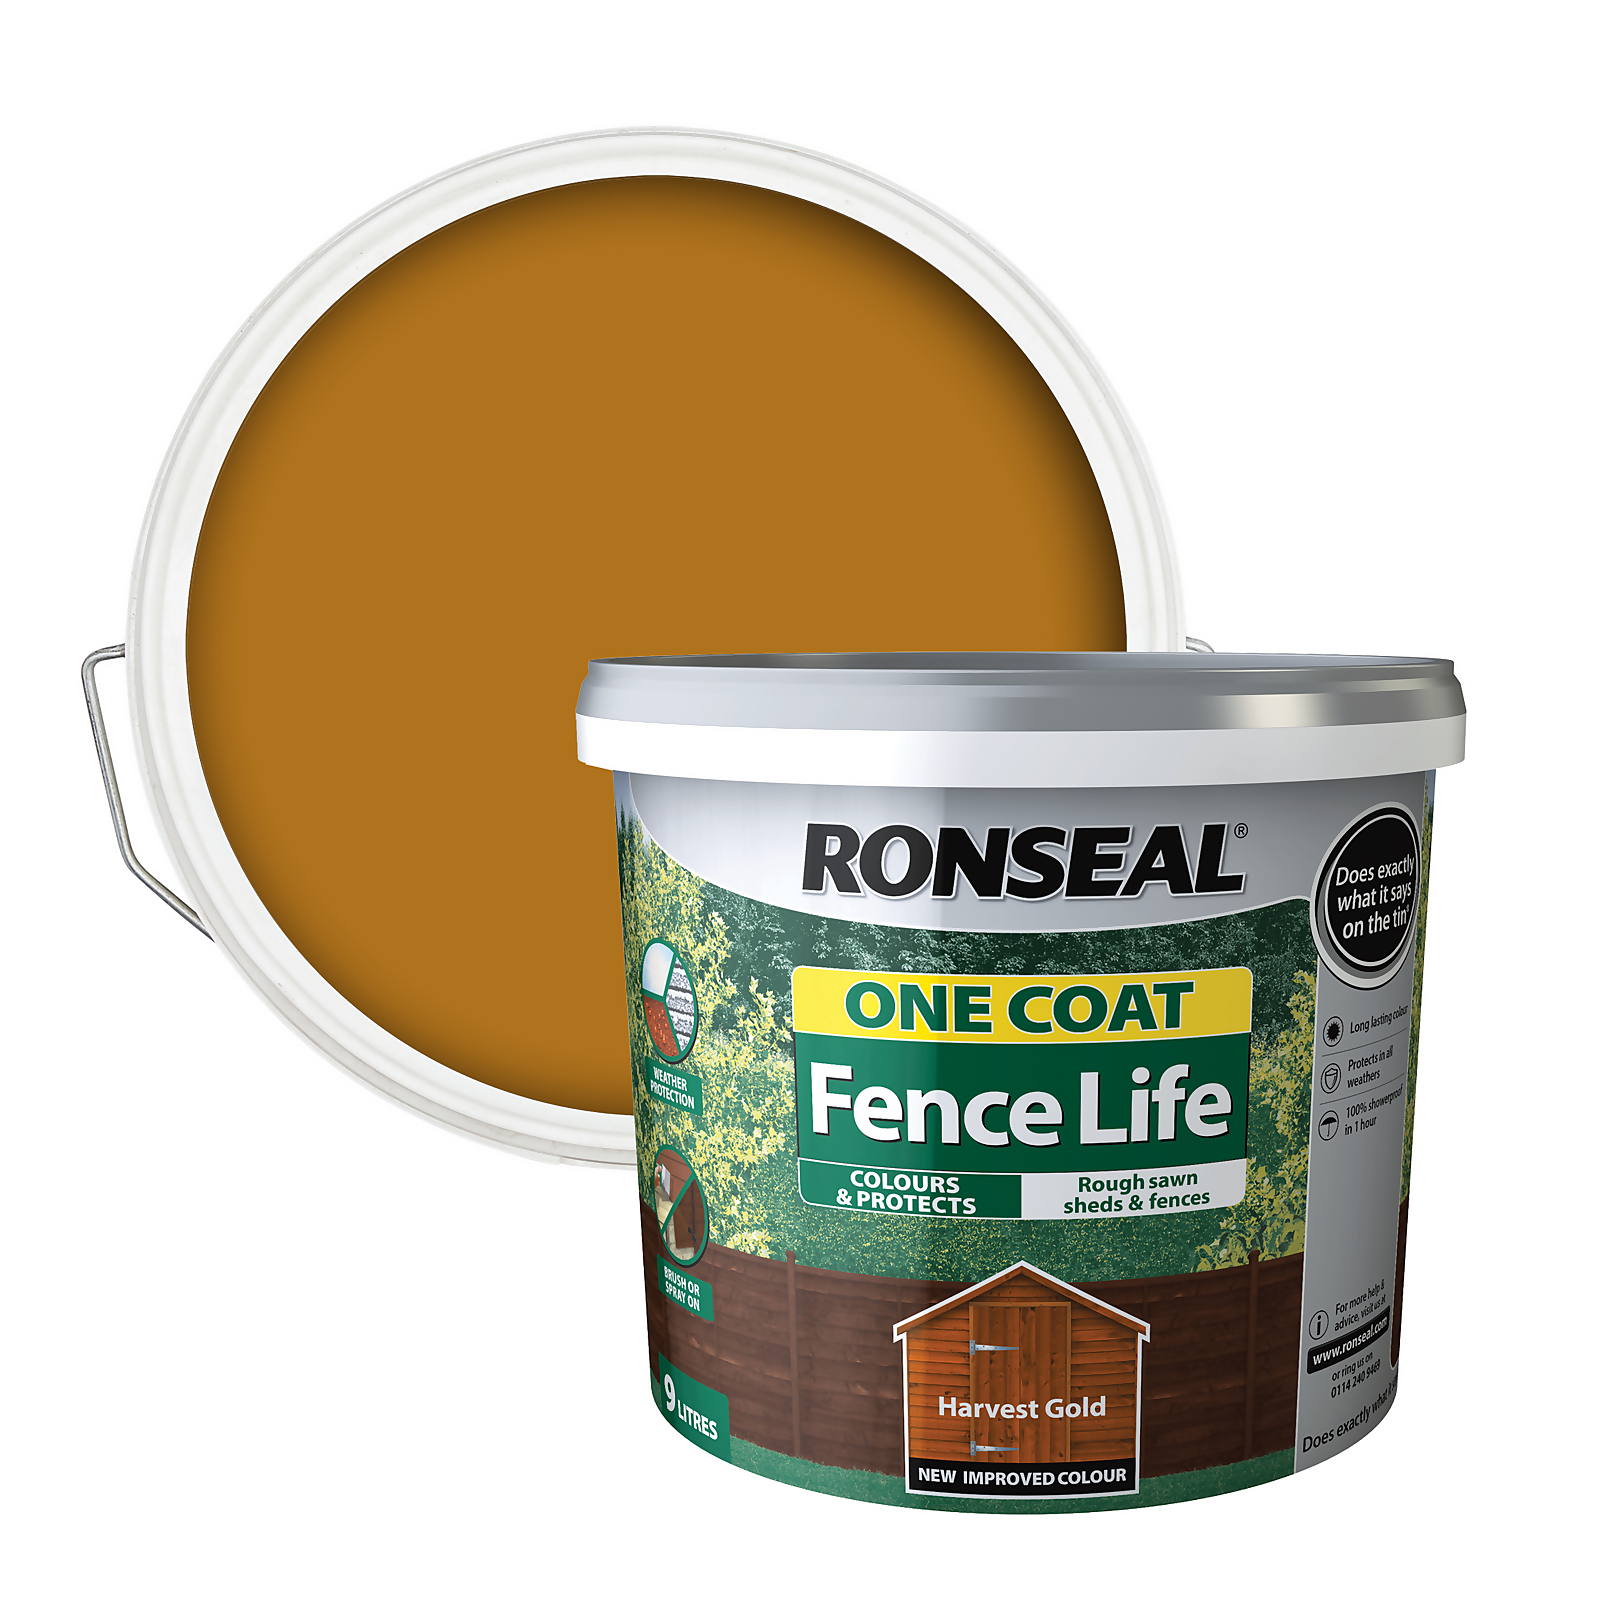 Ronseal One Coat Fence Life Paint Tudor Harvest Gold - 9L